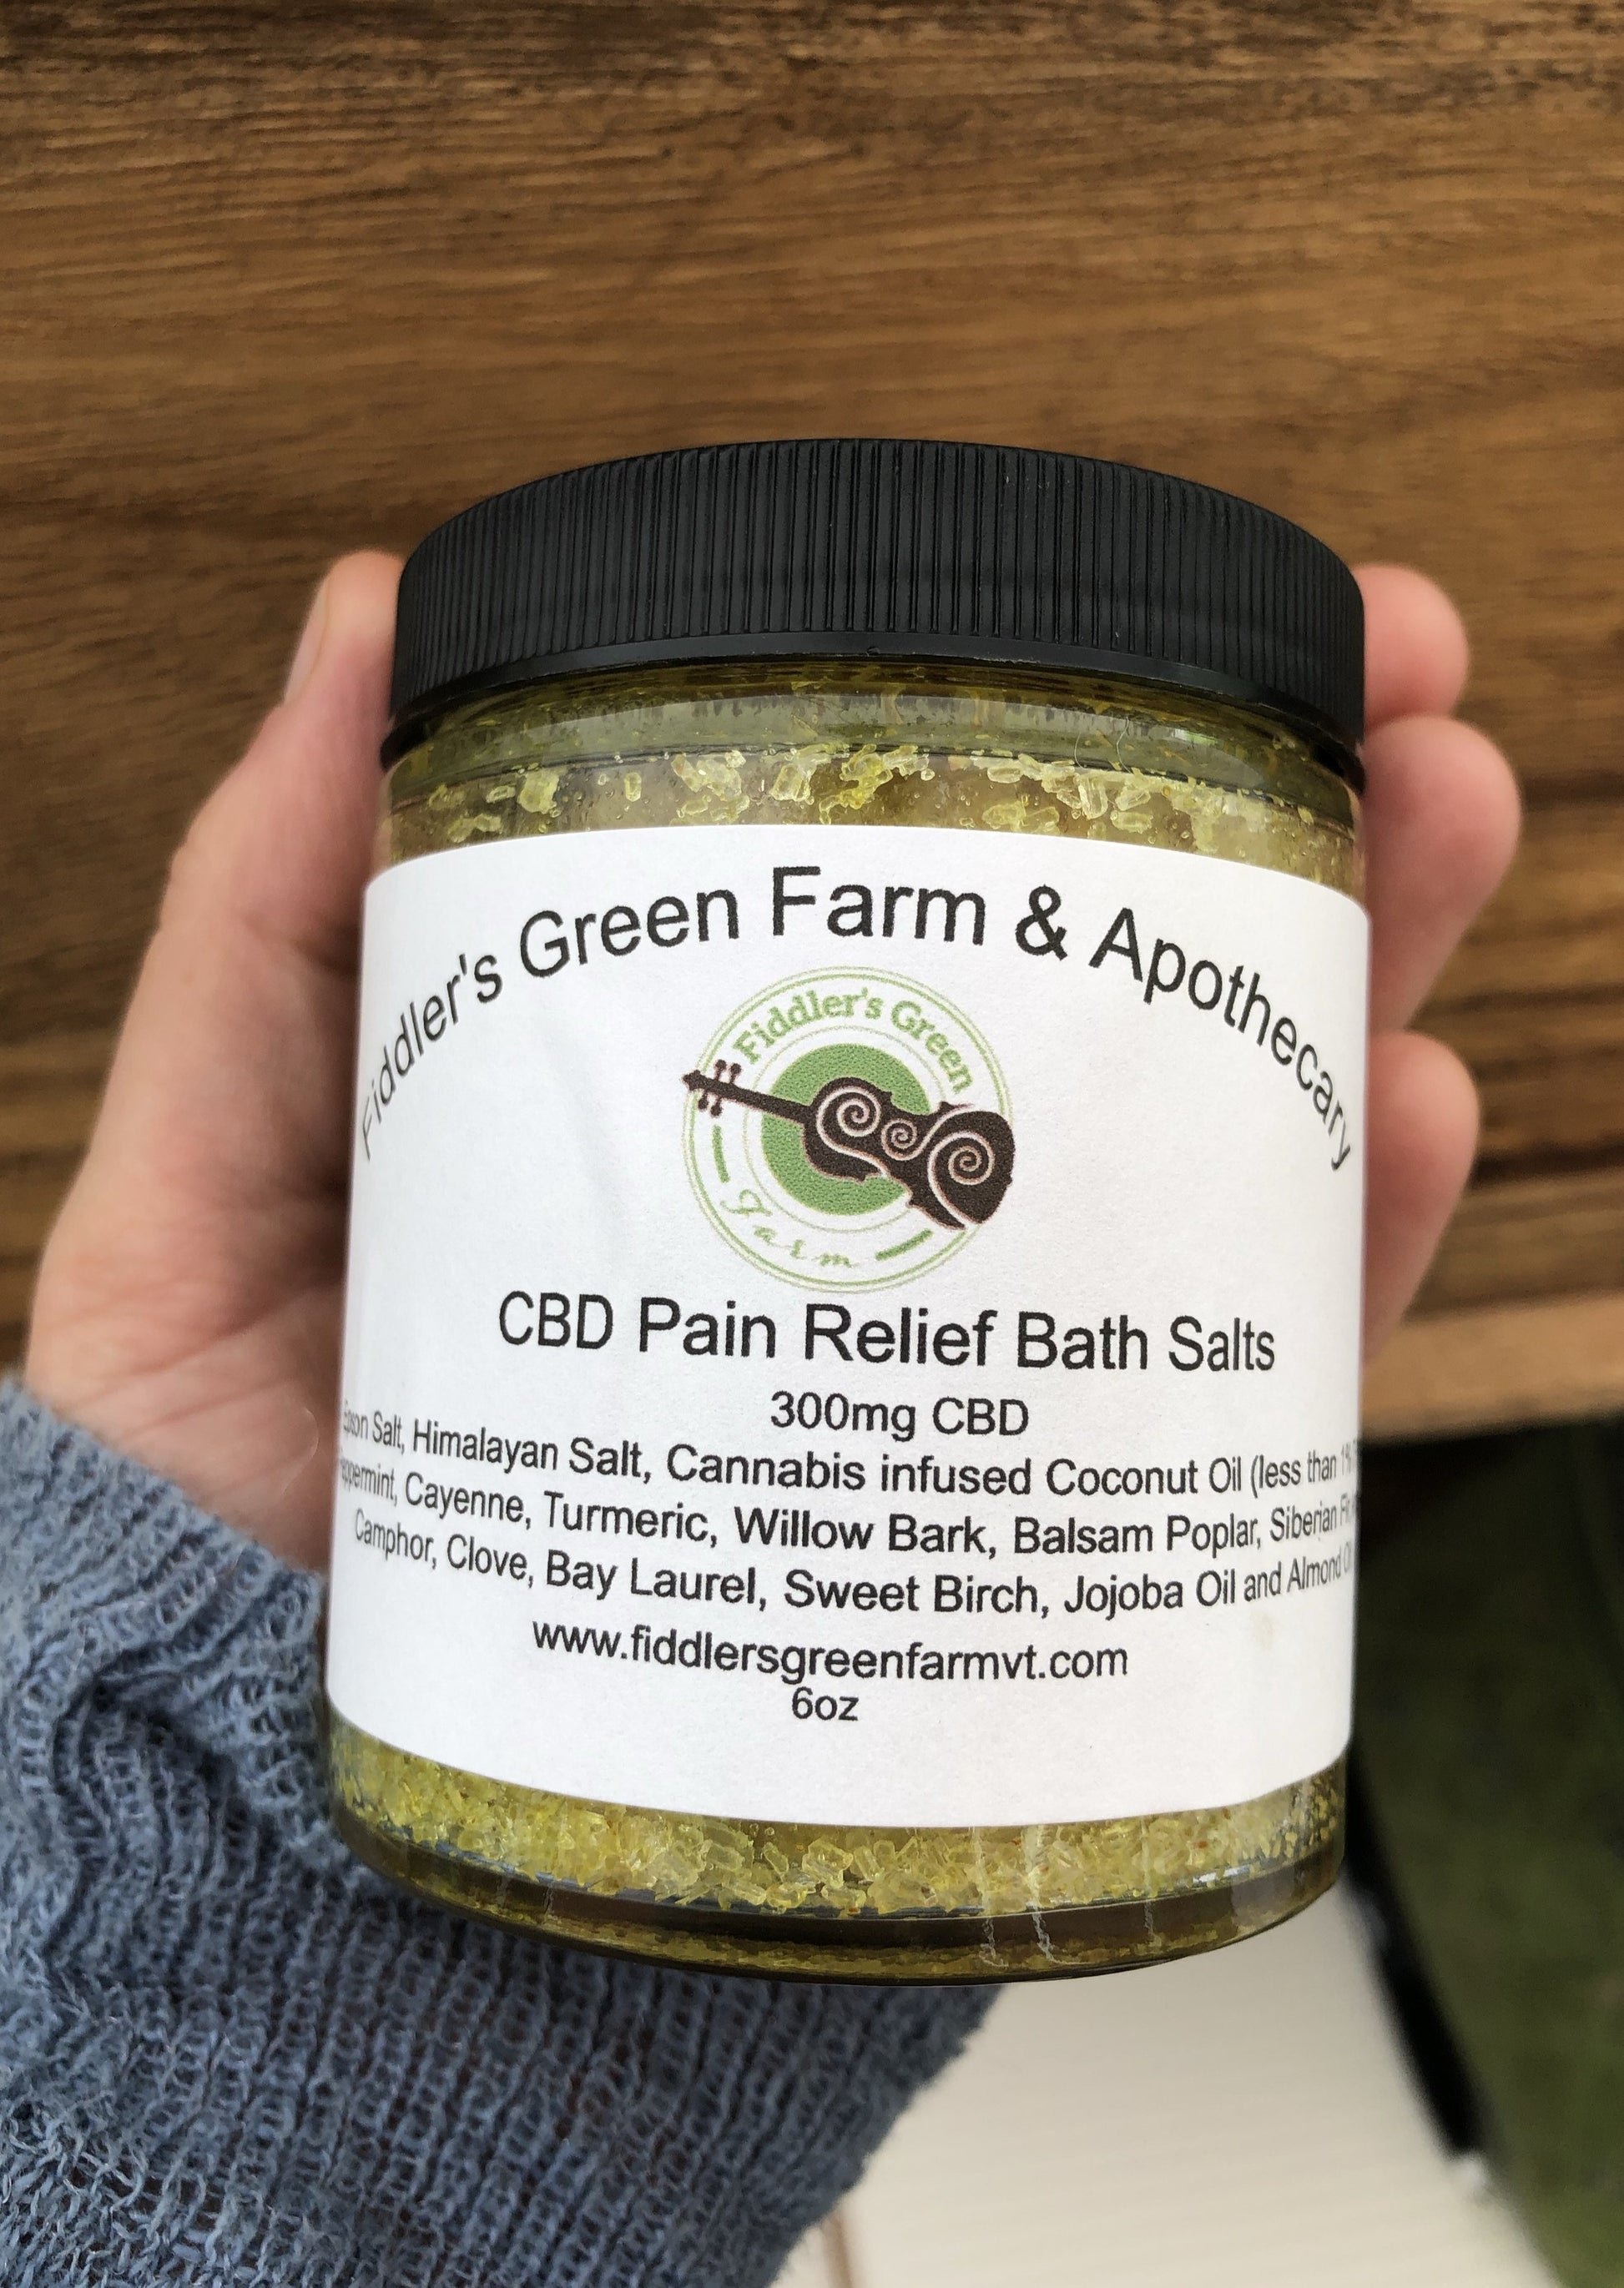    cbd-pain-relief-bath-salts-2